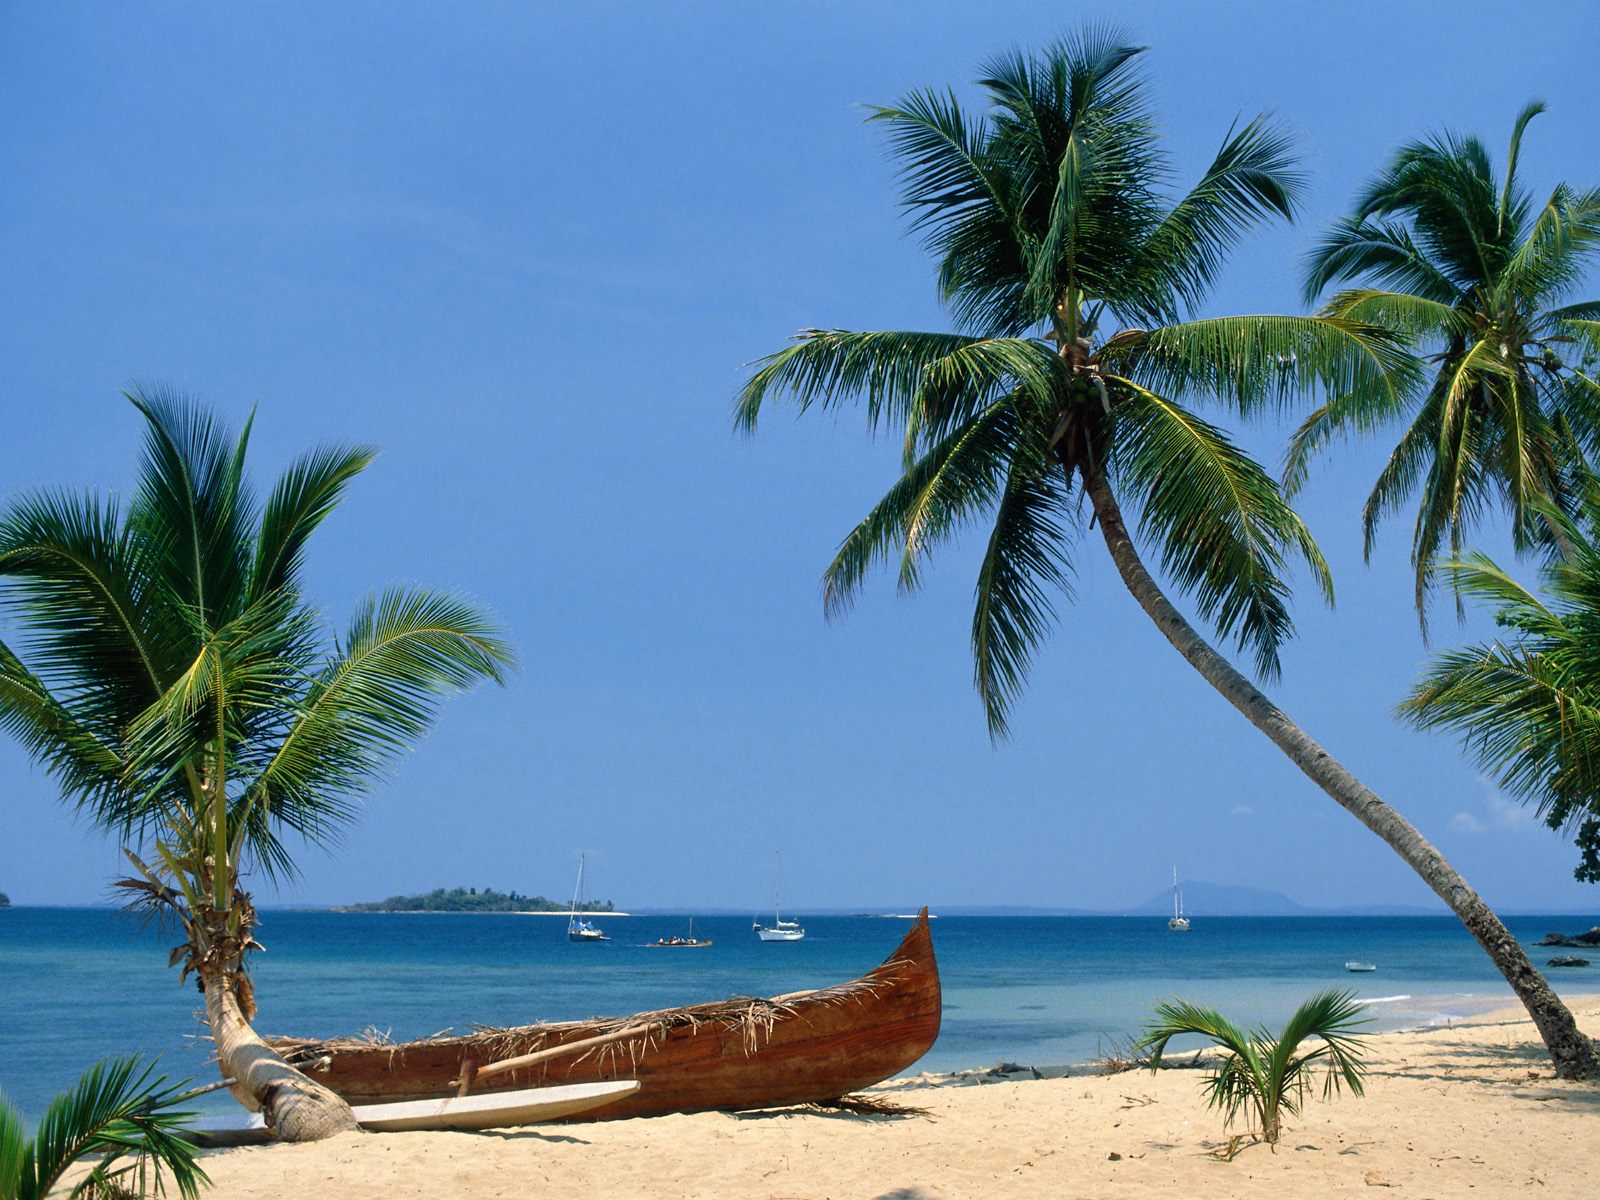 Palm tree on a beach.